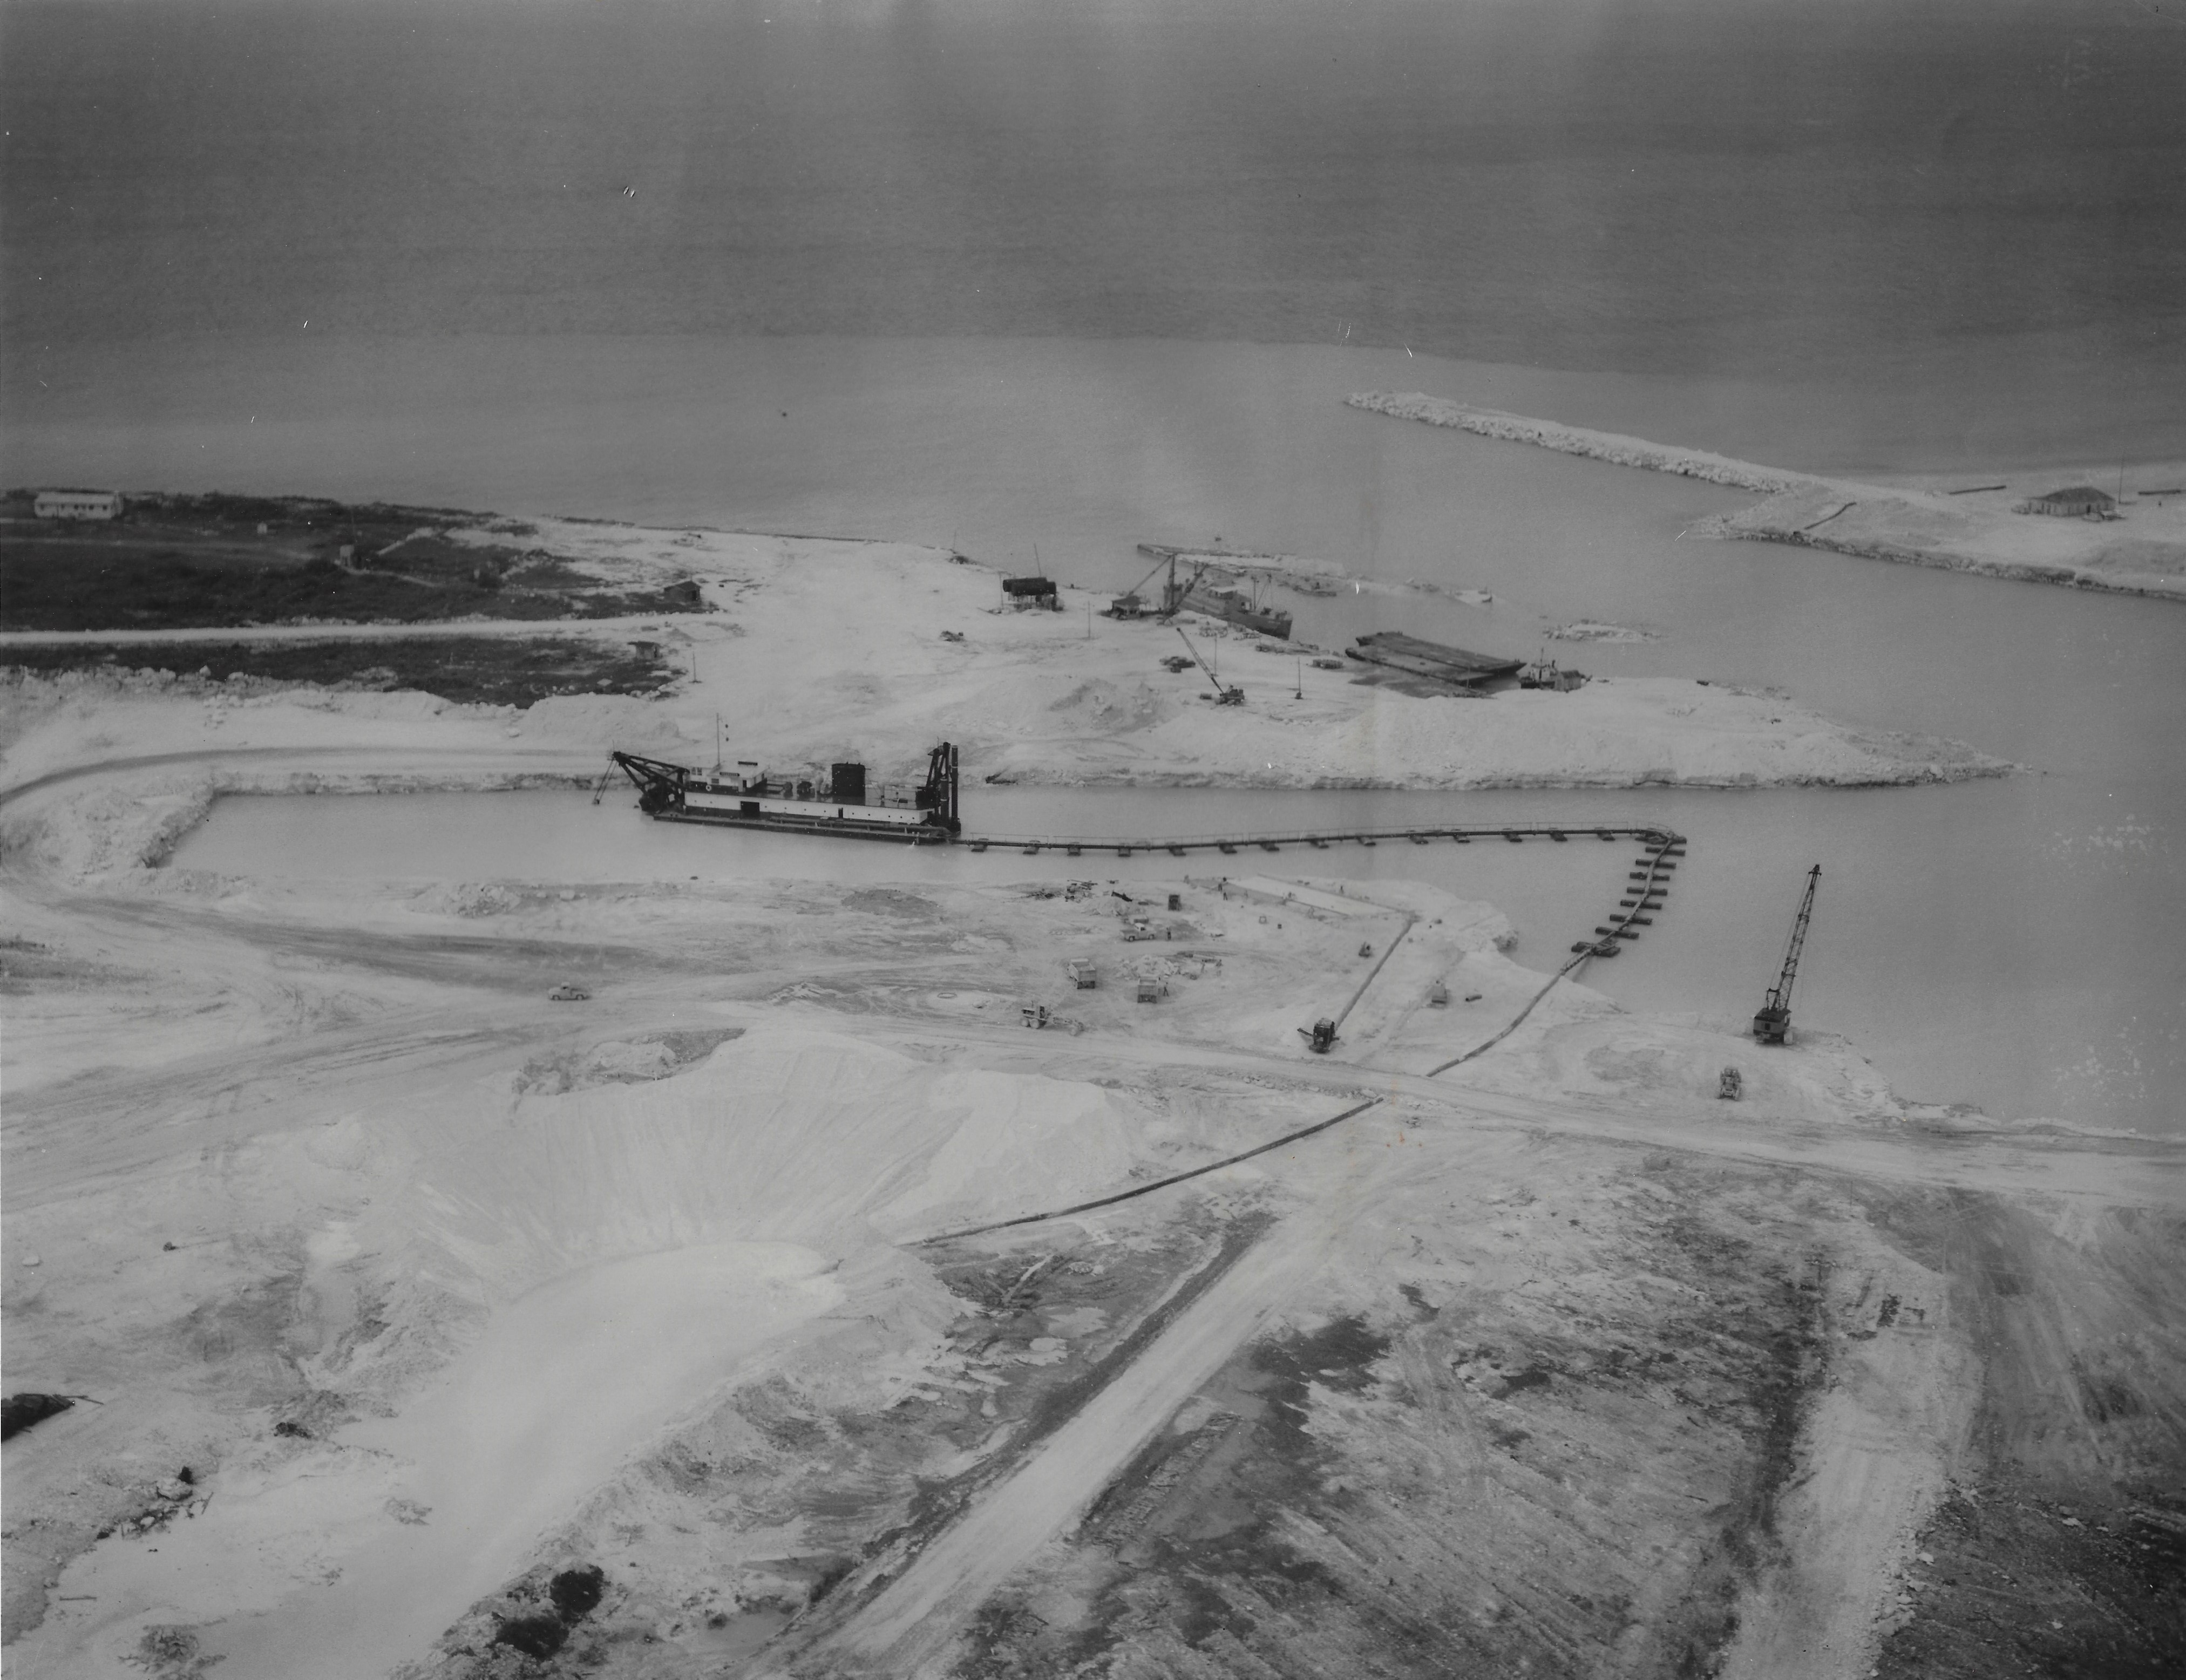 Dredging of Freeport Harbour, 1950's